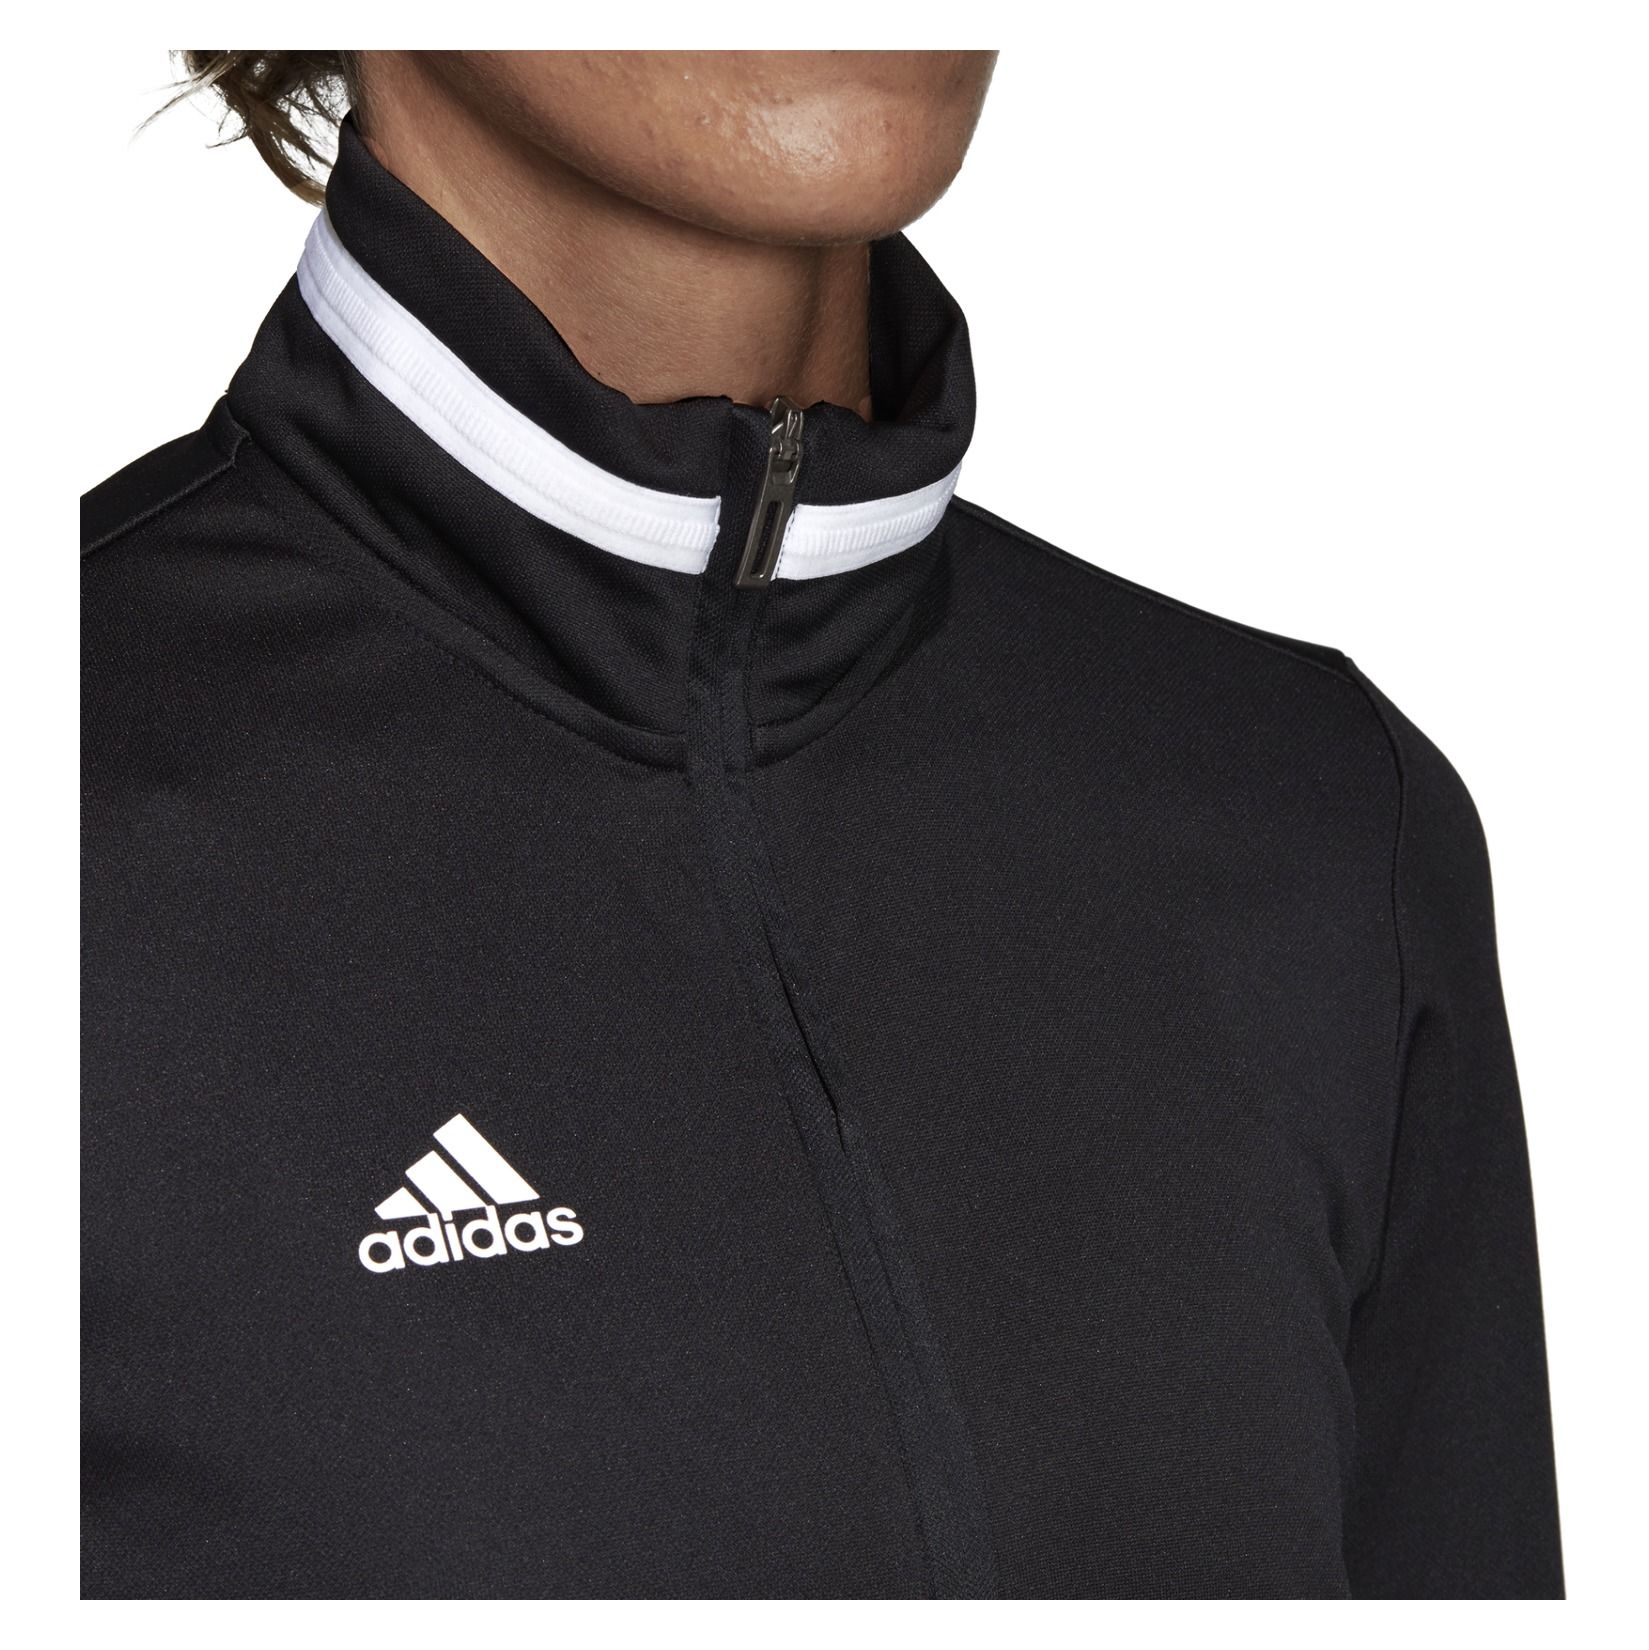 Adidas Womens Team 19 Track Jacket (w)